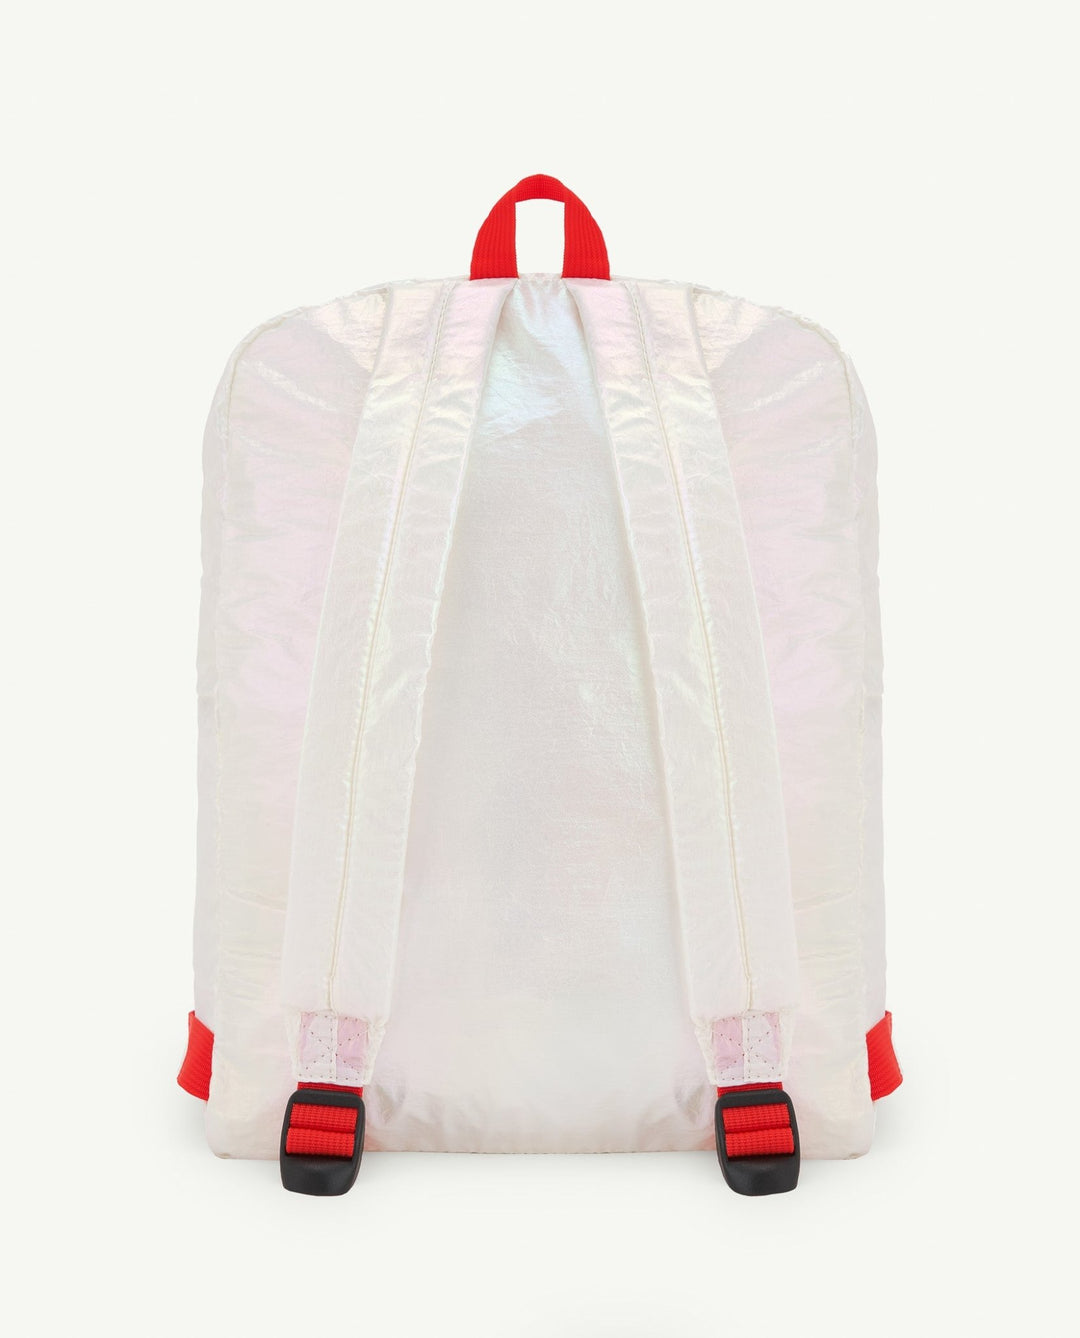 Backpack OS Bag - Iridesc - Posh New York